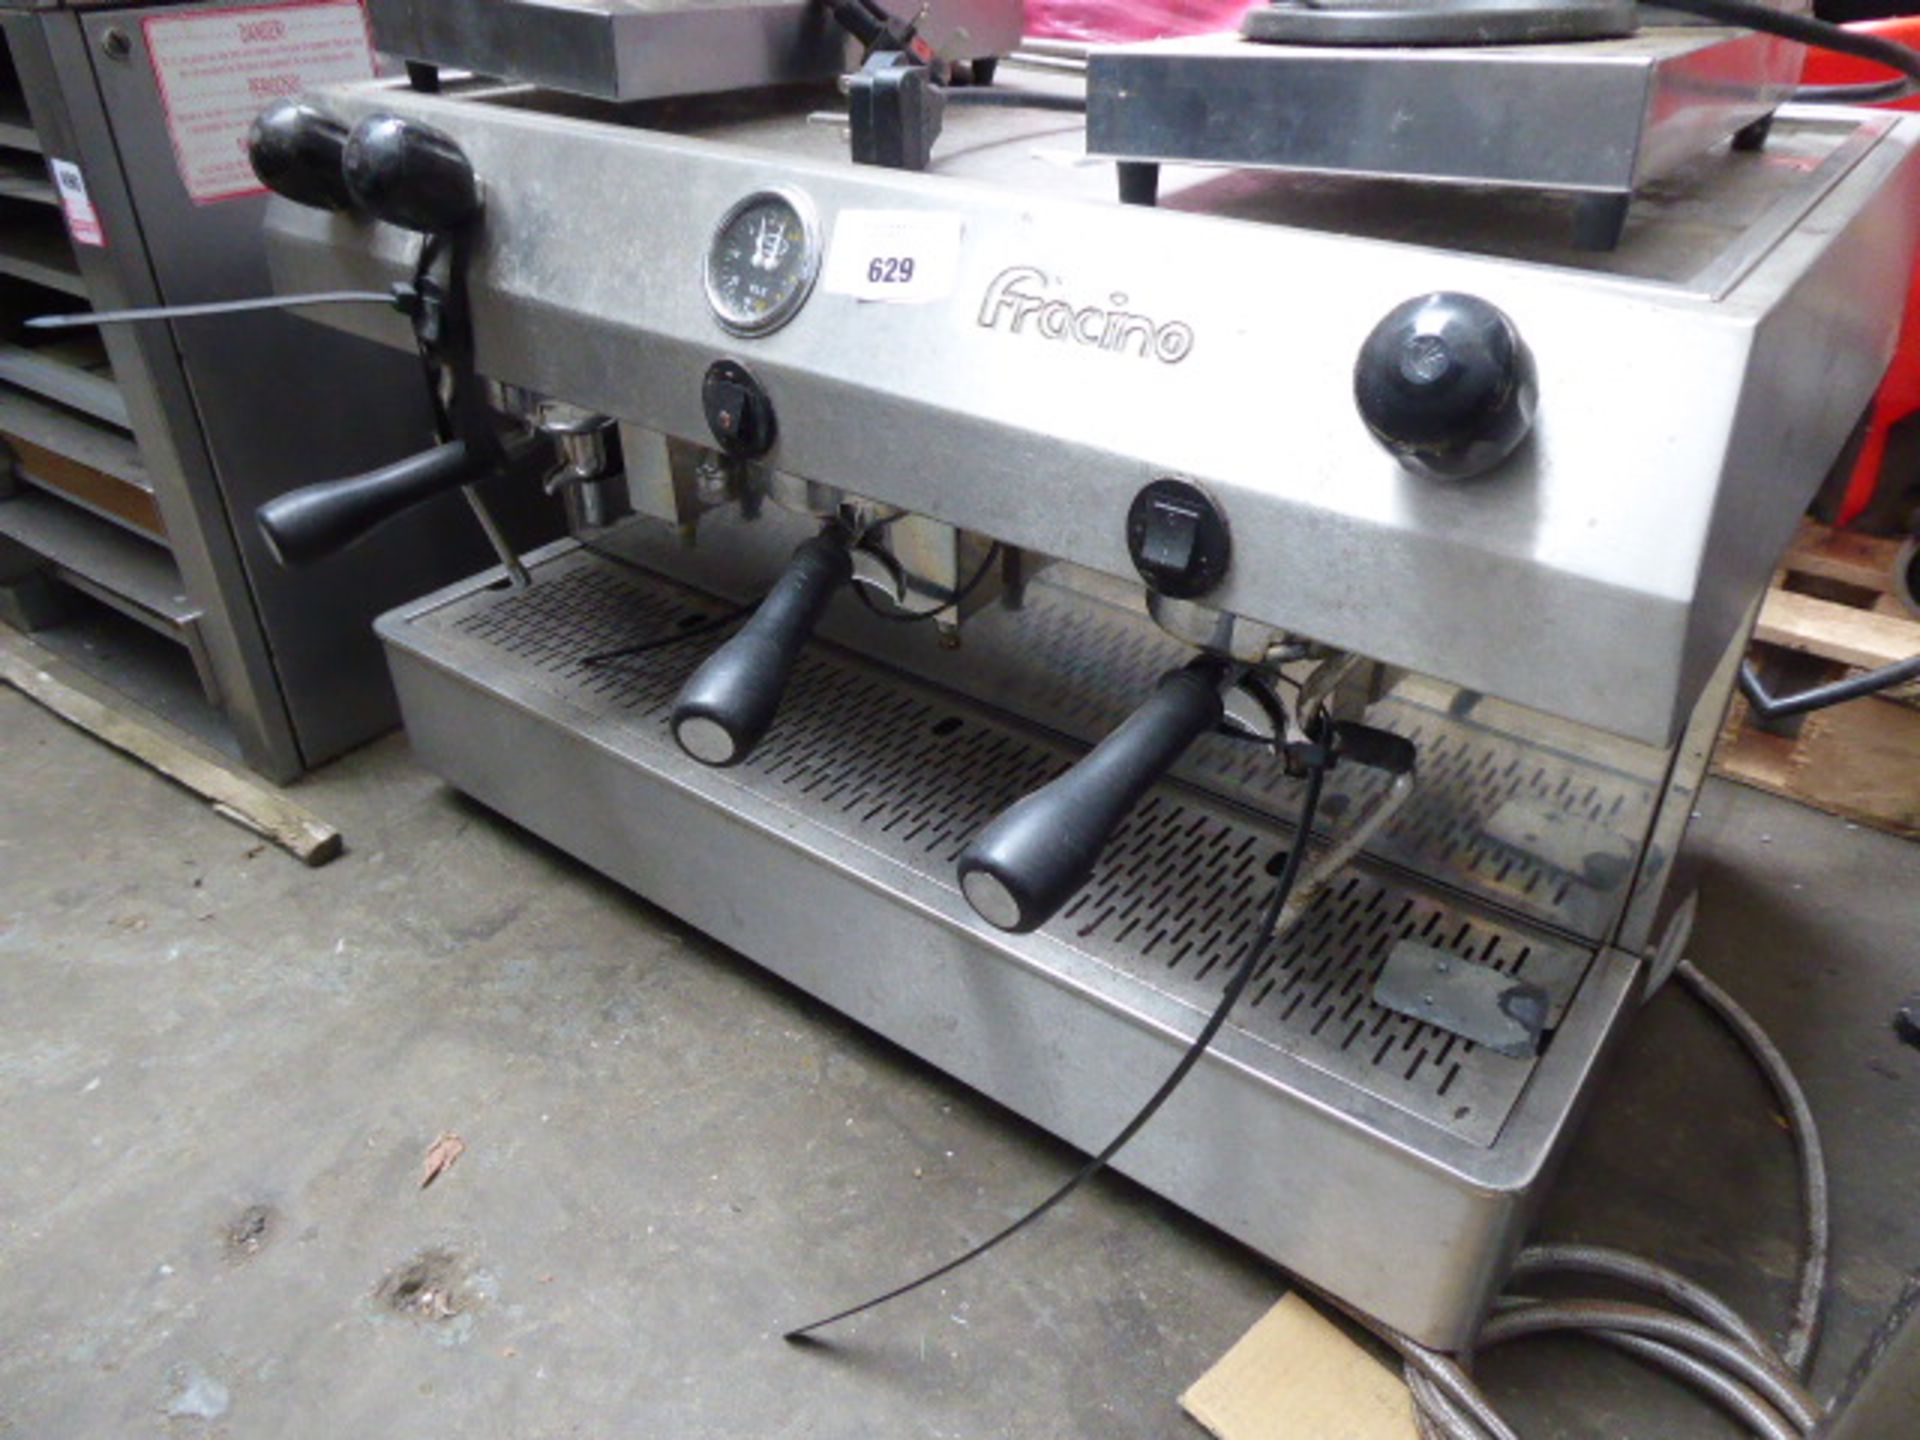 206 80cm Faema barista style 3 station coffee machine with 3 group heads